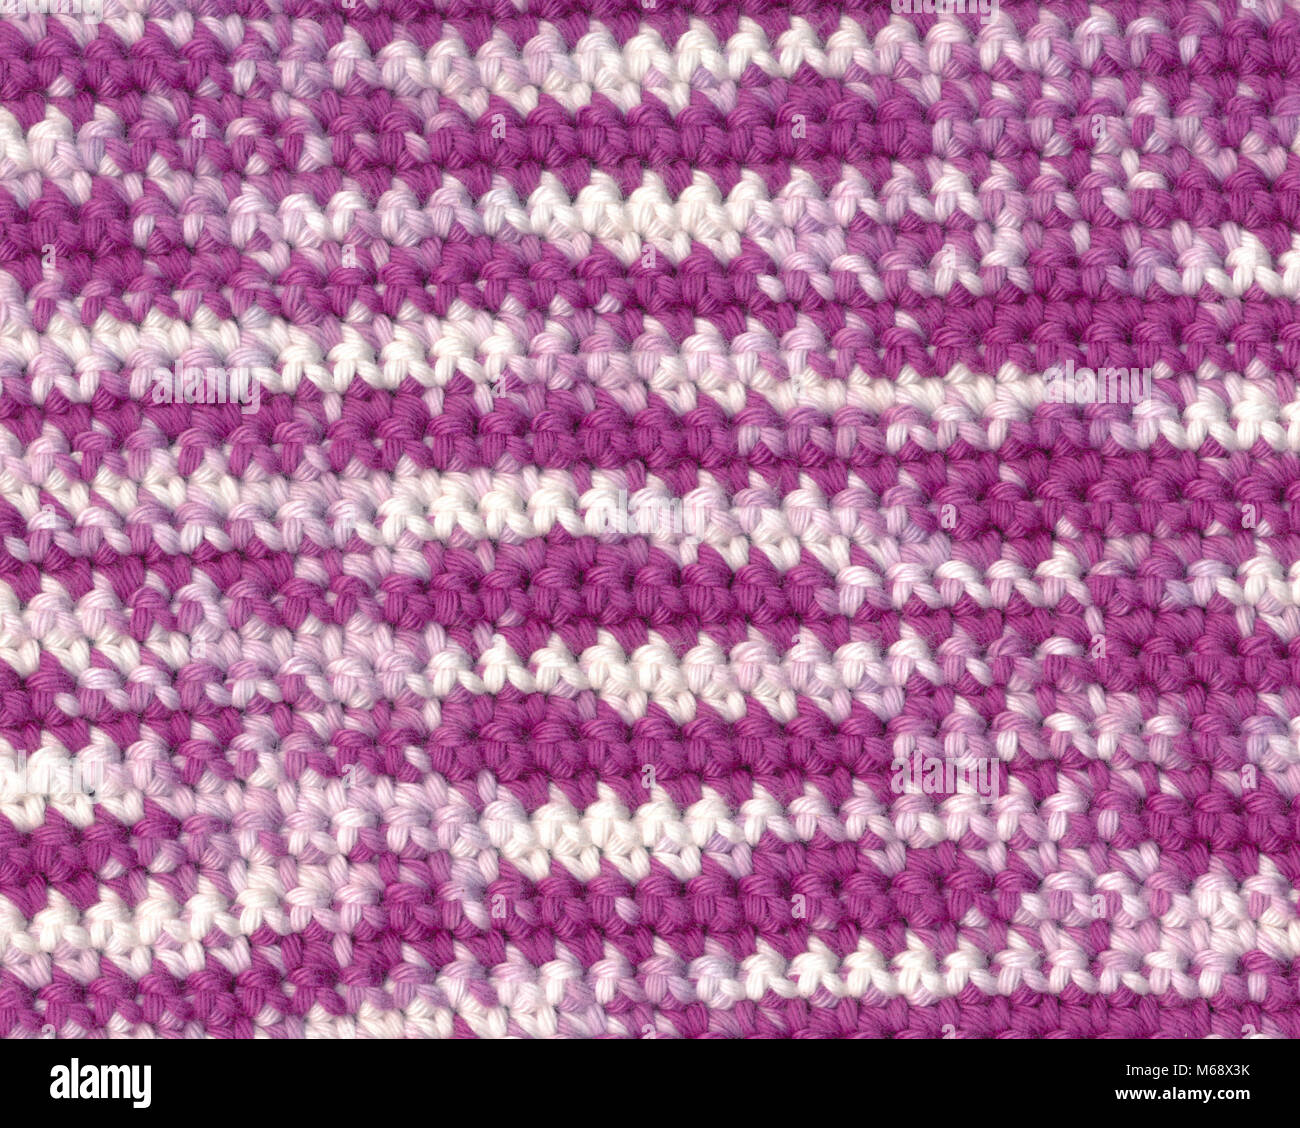 Background - crochet - white and purple variegated yarn Stock Photo